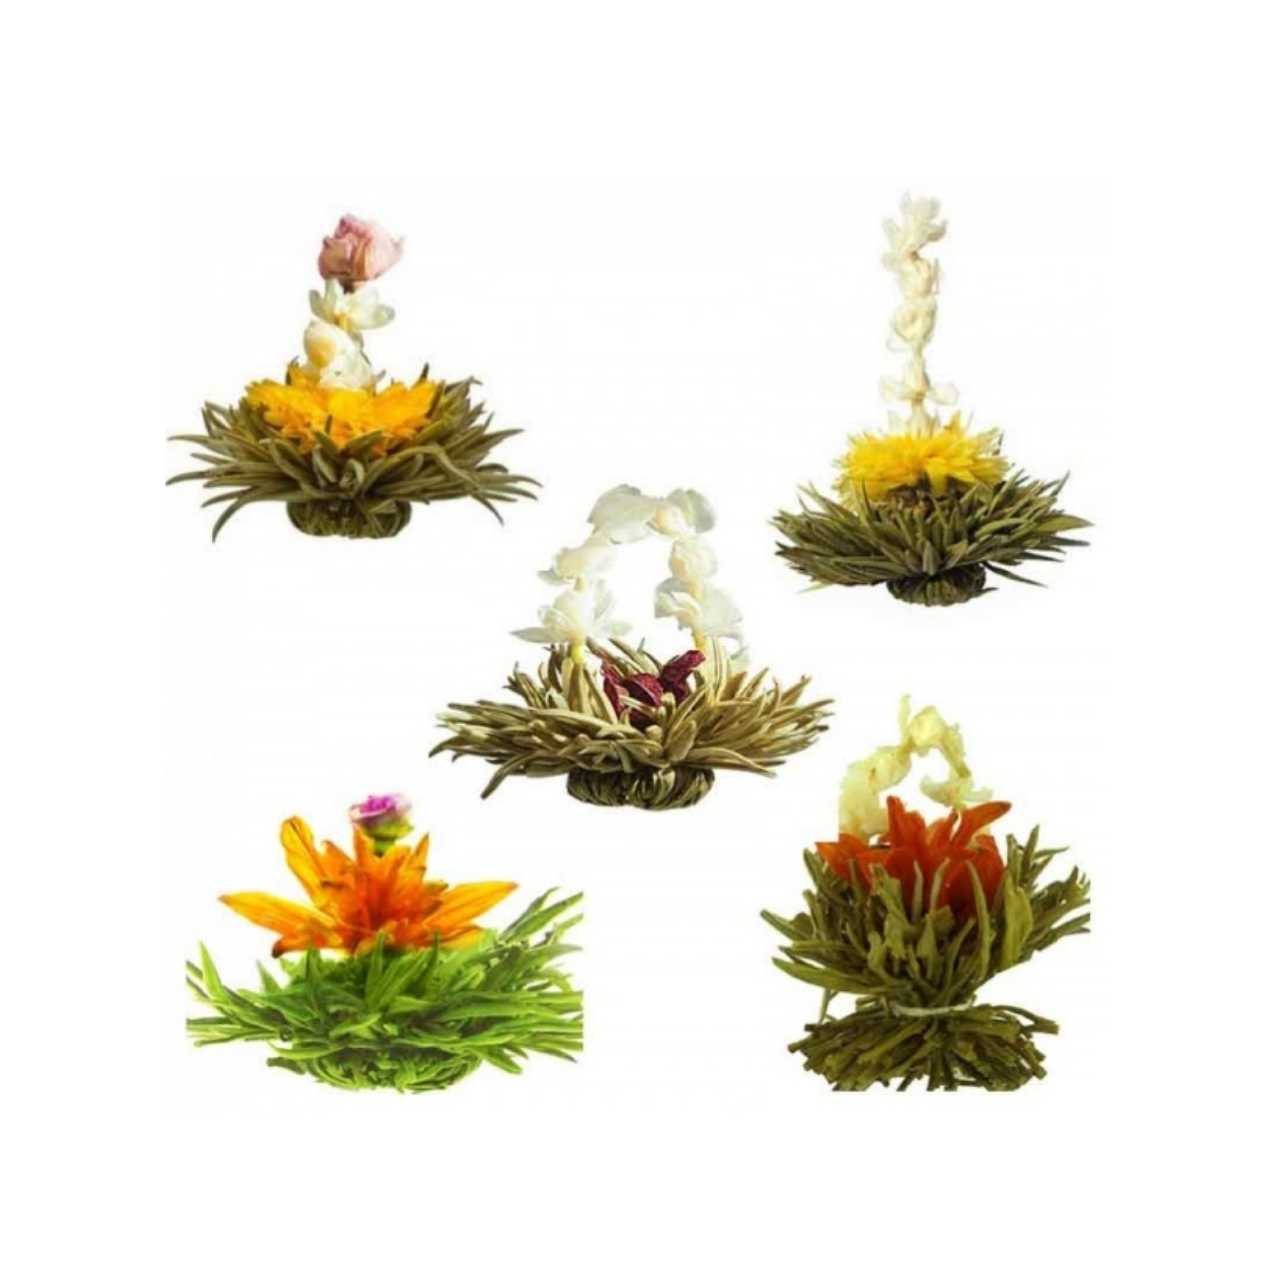 Artisan Flowering Tea Bulbs Gift Set with 5 Bulbs